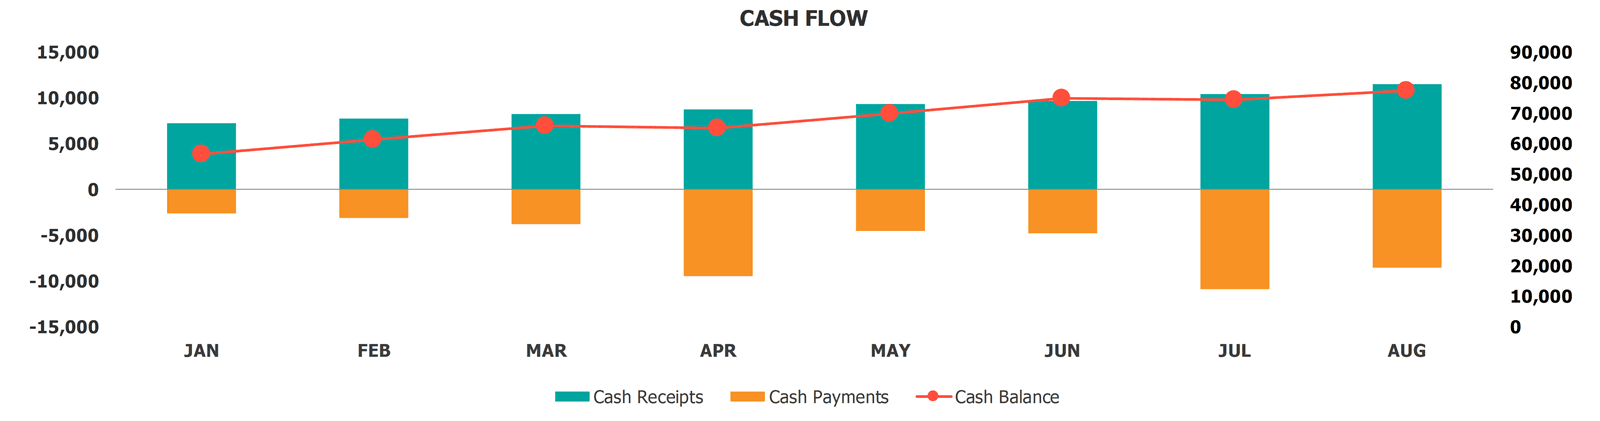 cash flow dashboard excel